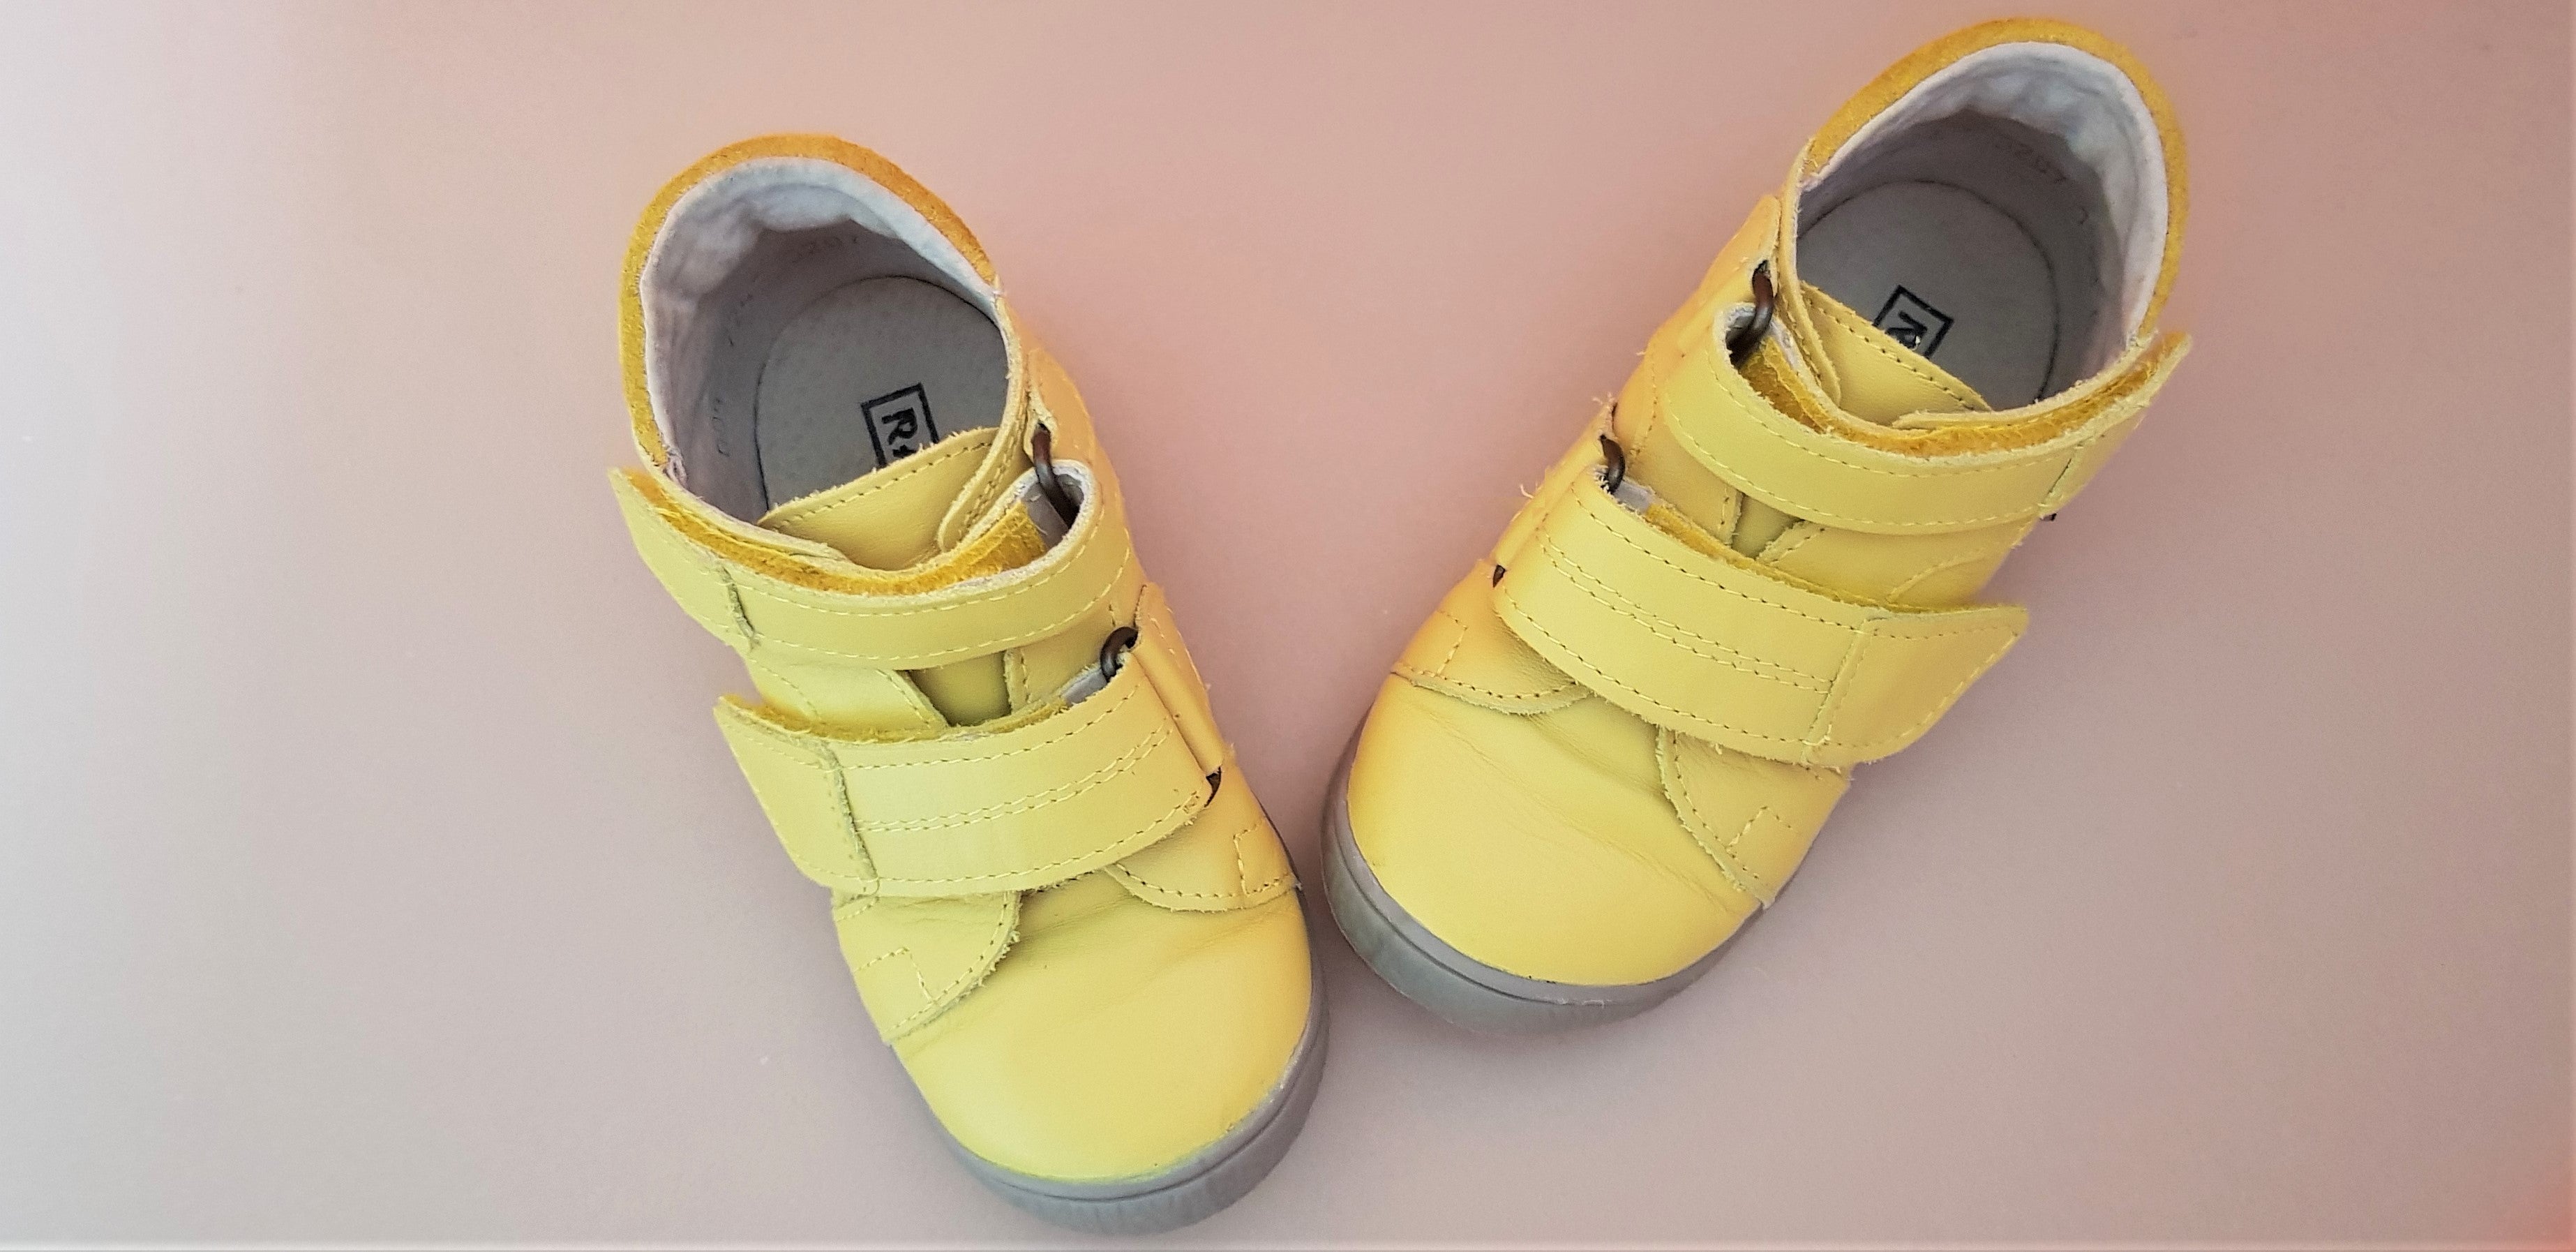 Children's shoes - Yellow